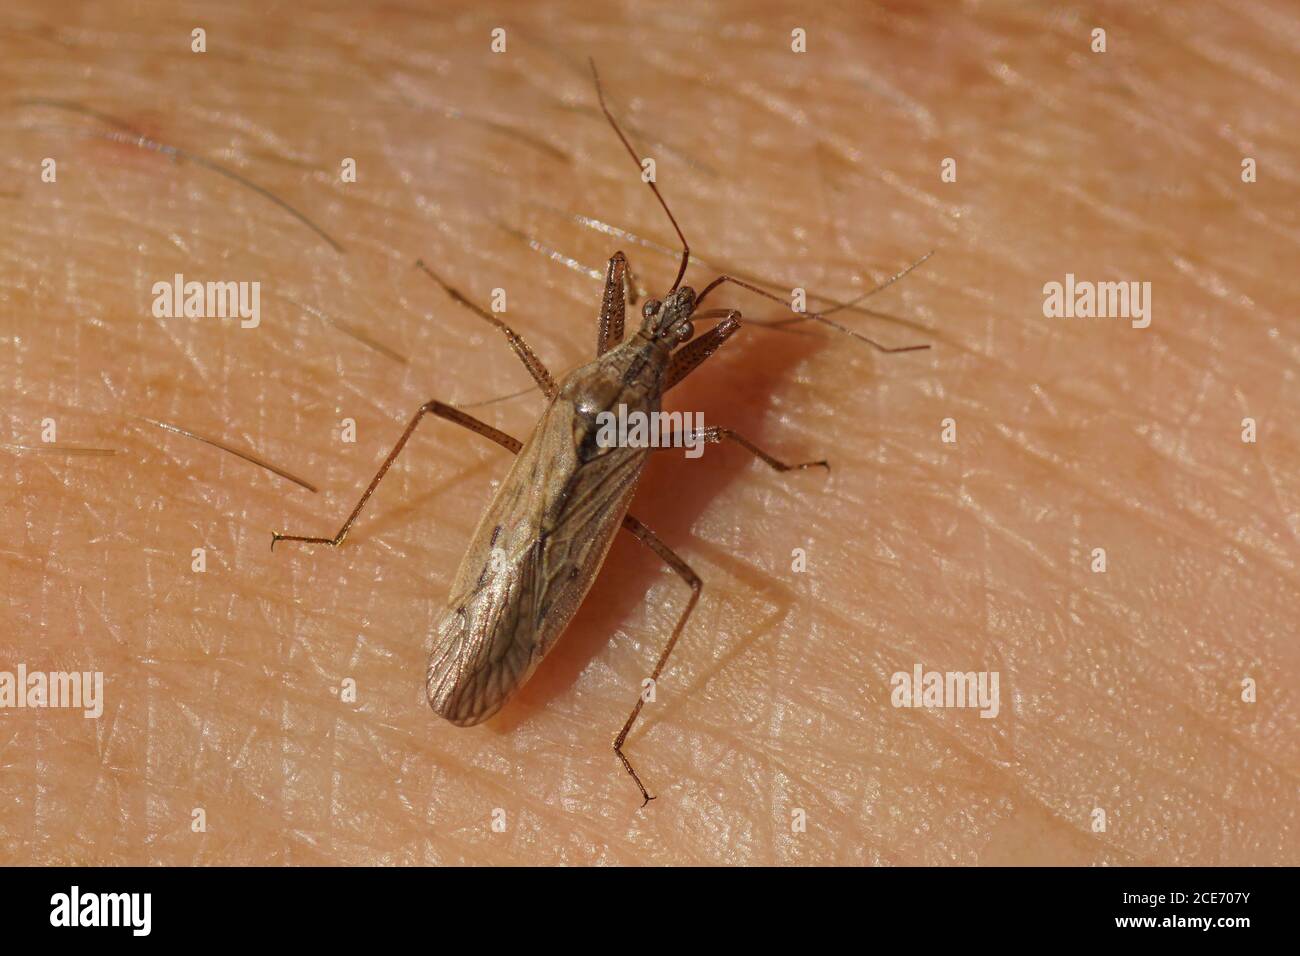 A Field Damsel Bug (Nabis Ferus) or a Nabis pseudoferus on my hand. Family Nabidae. Netherlands, October Stock Photo